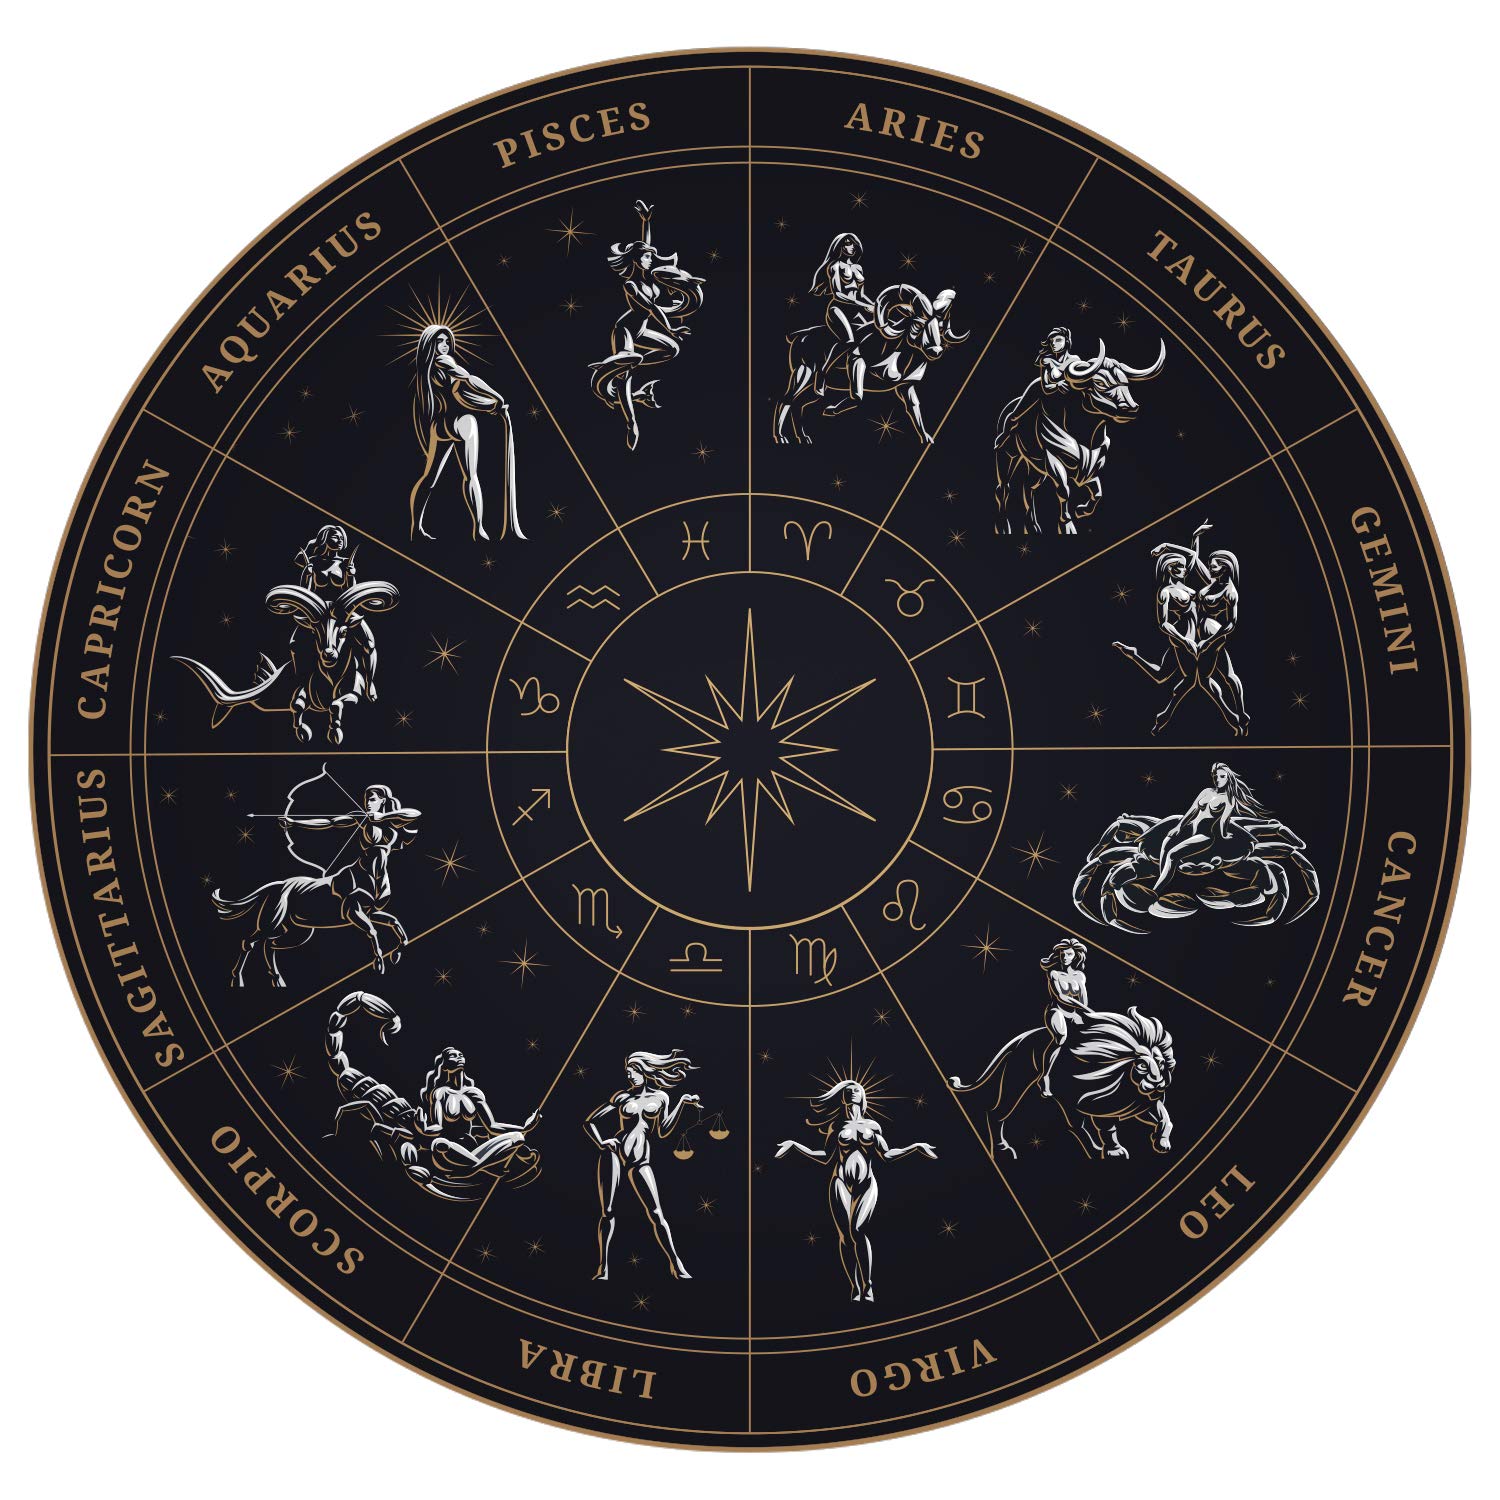 Zodiac Wheel Wallpapers